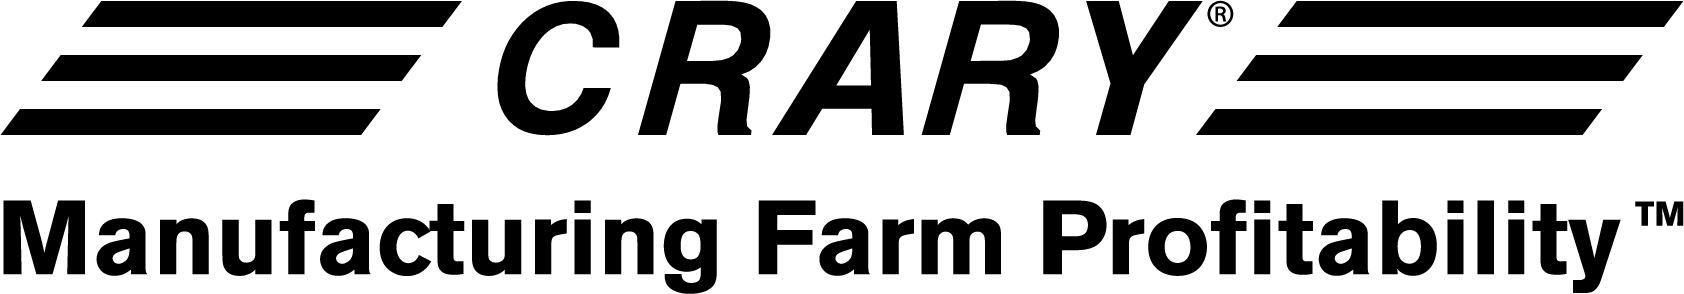 Crary Ag logo tagline Black High Res